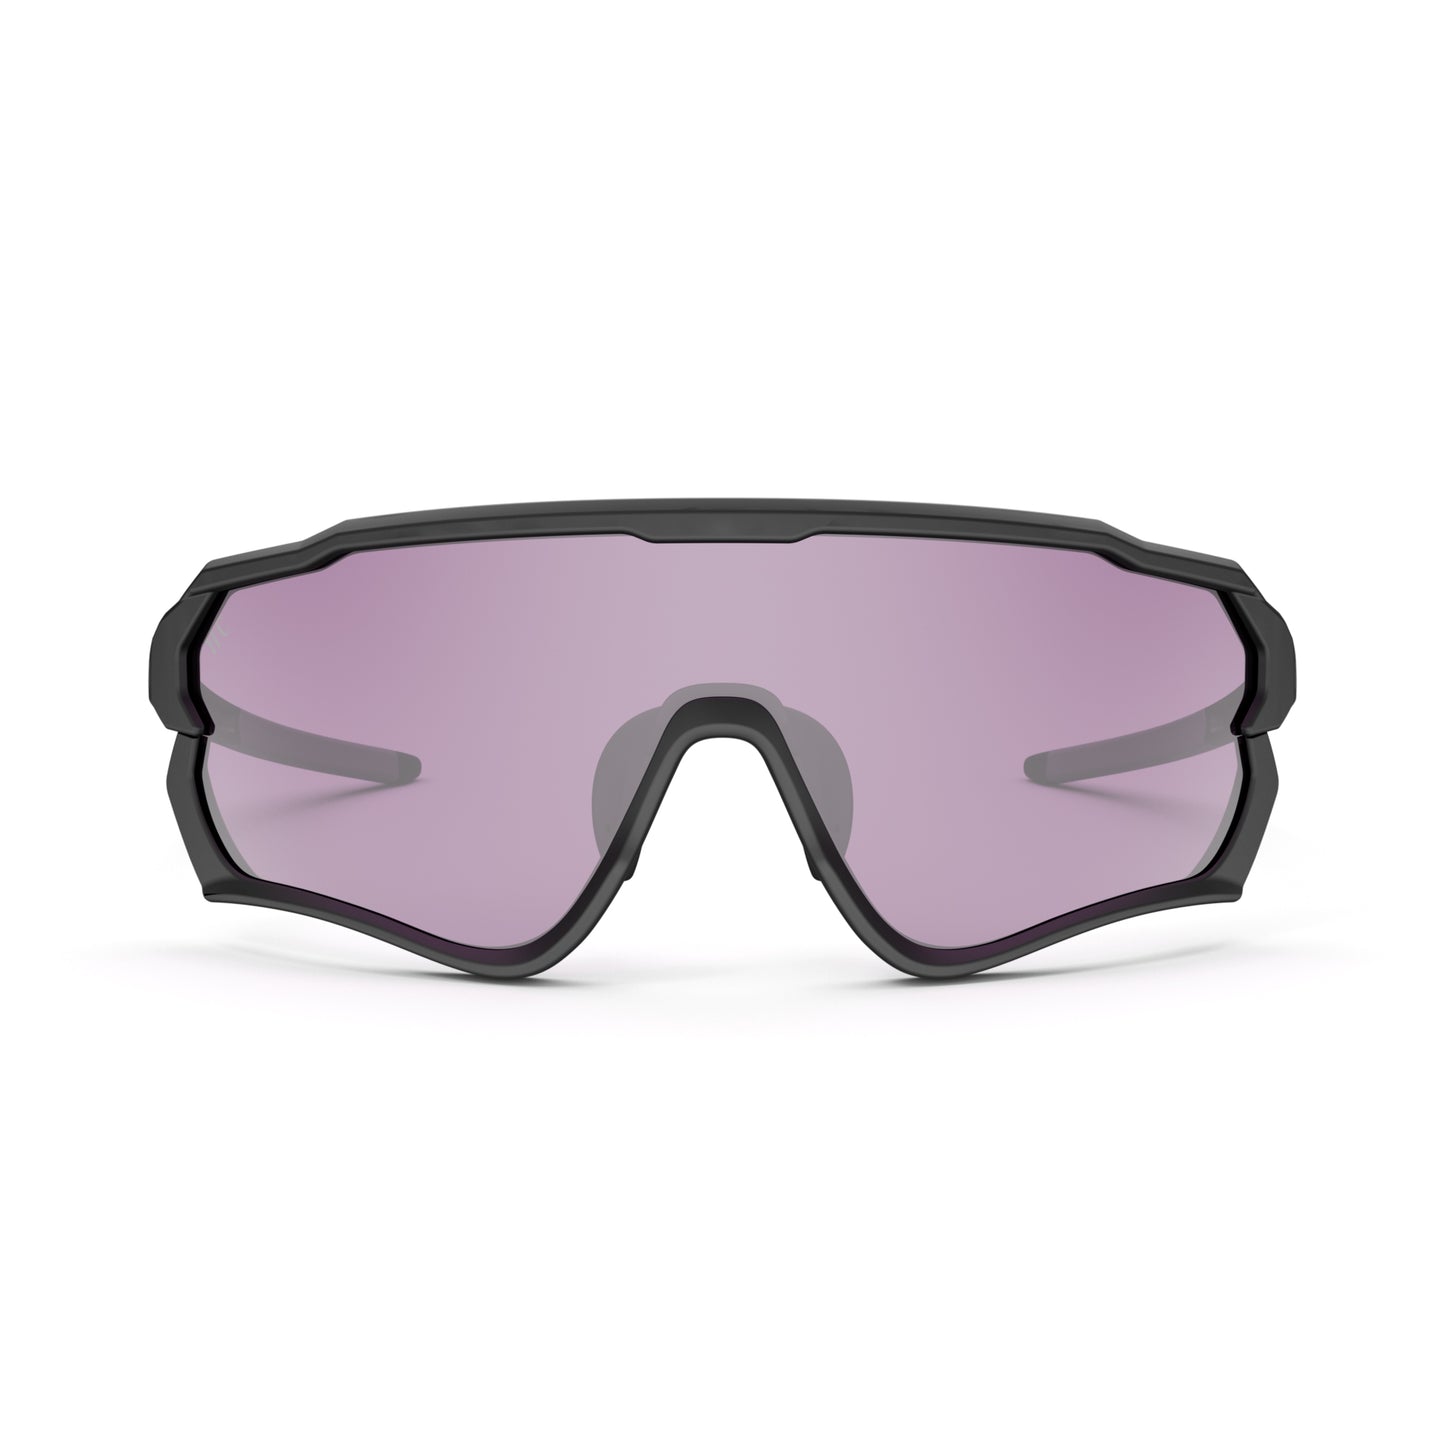 FRIGG 1 Golf/Baseball Sunglasses